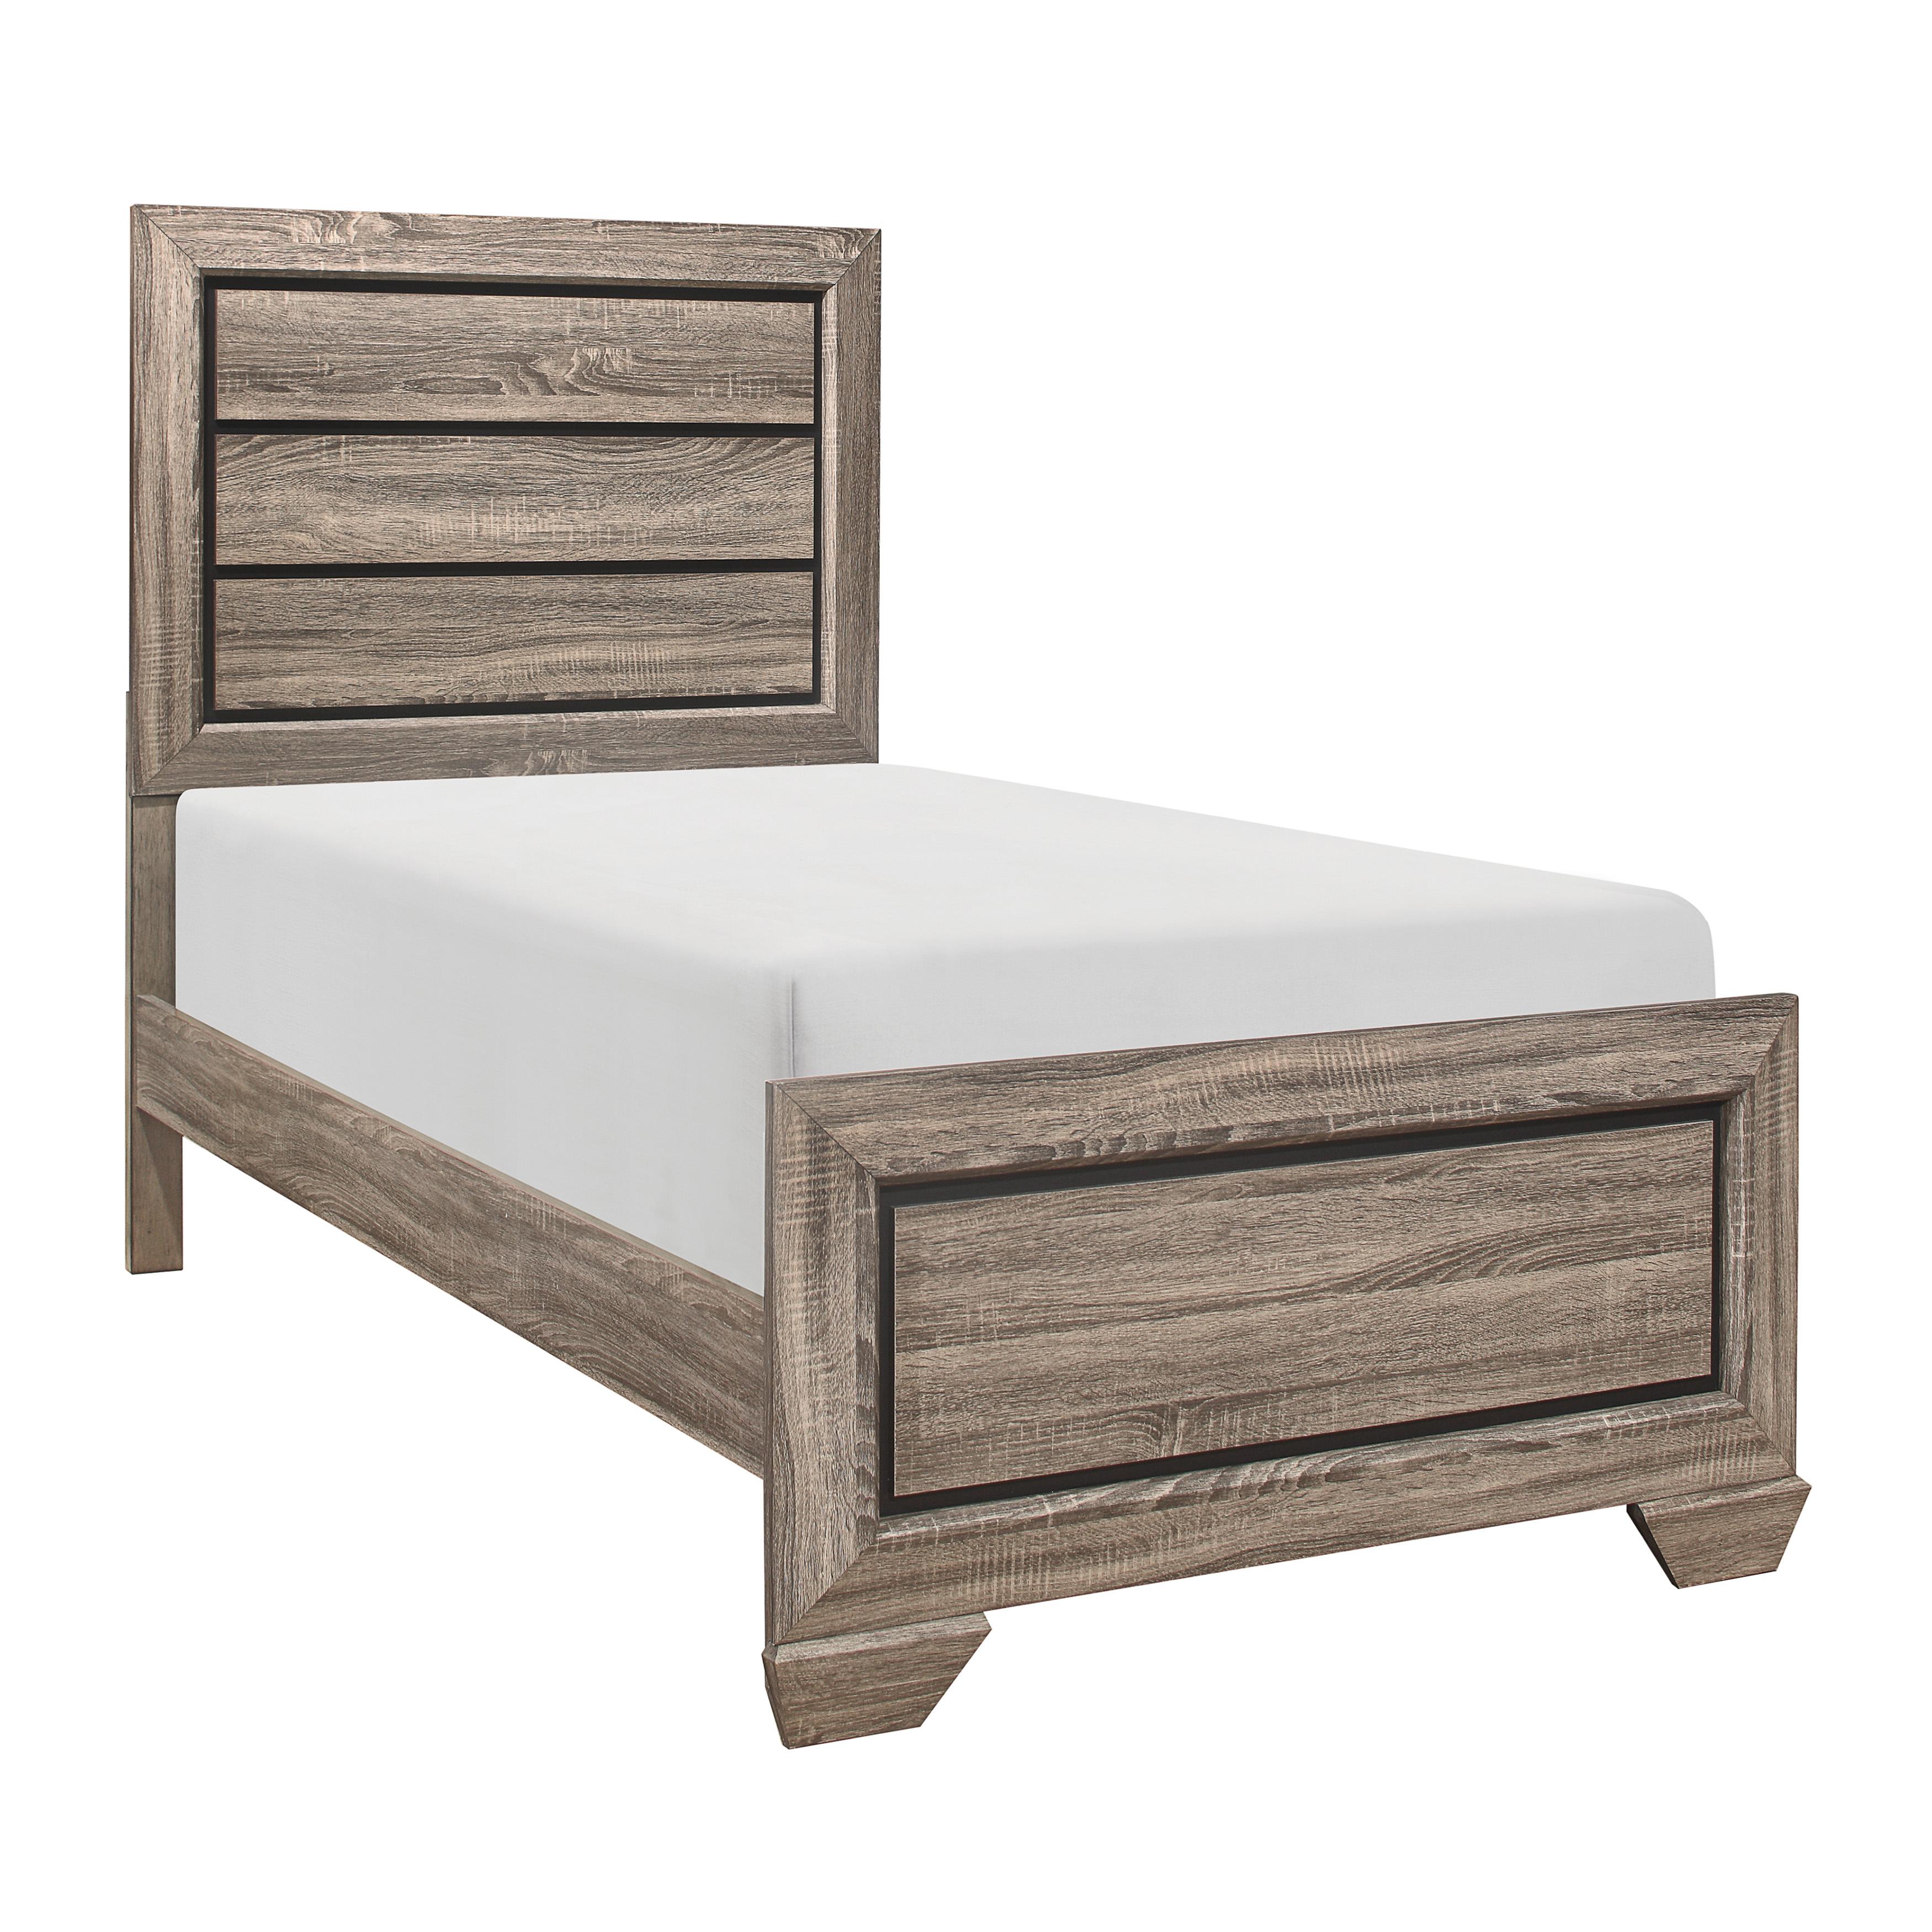 

    
Rustic Natural Finish Wood Twin Bedroom Set 5pcs Homelegance 1904T-1* Beechnut
